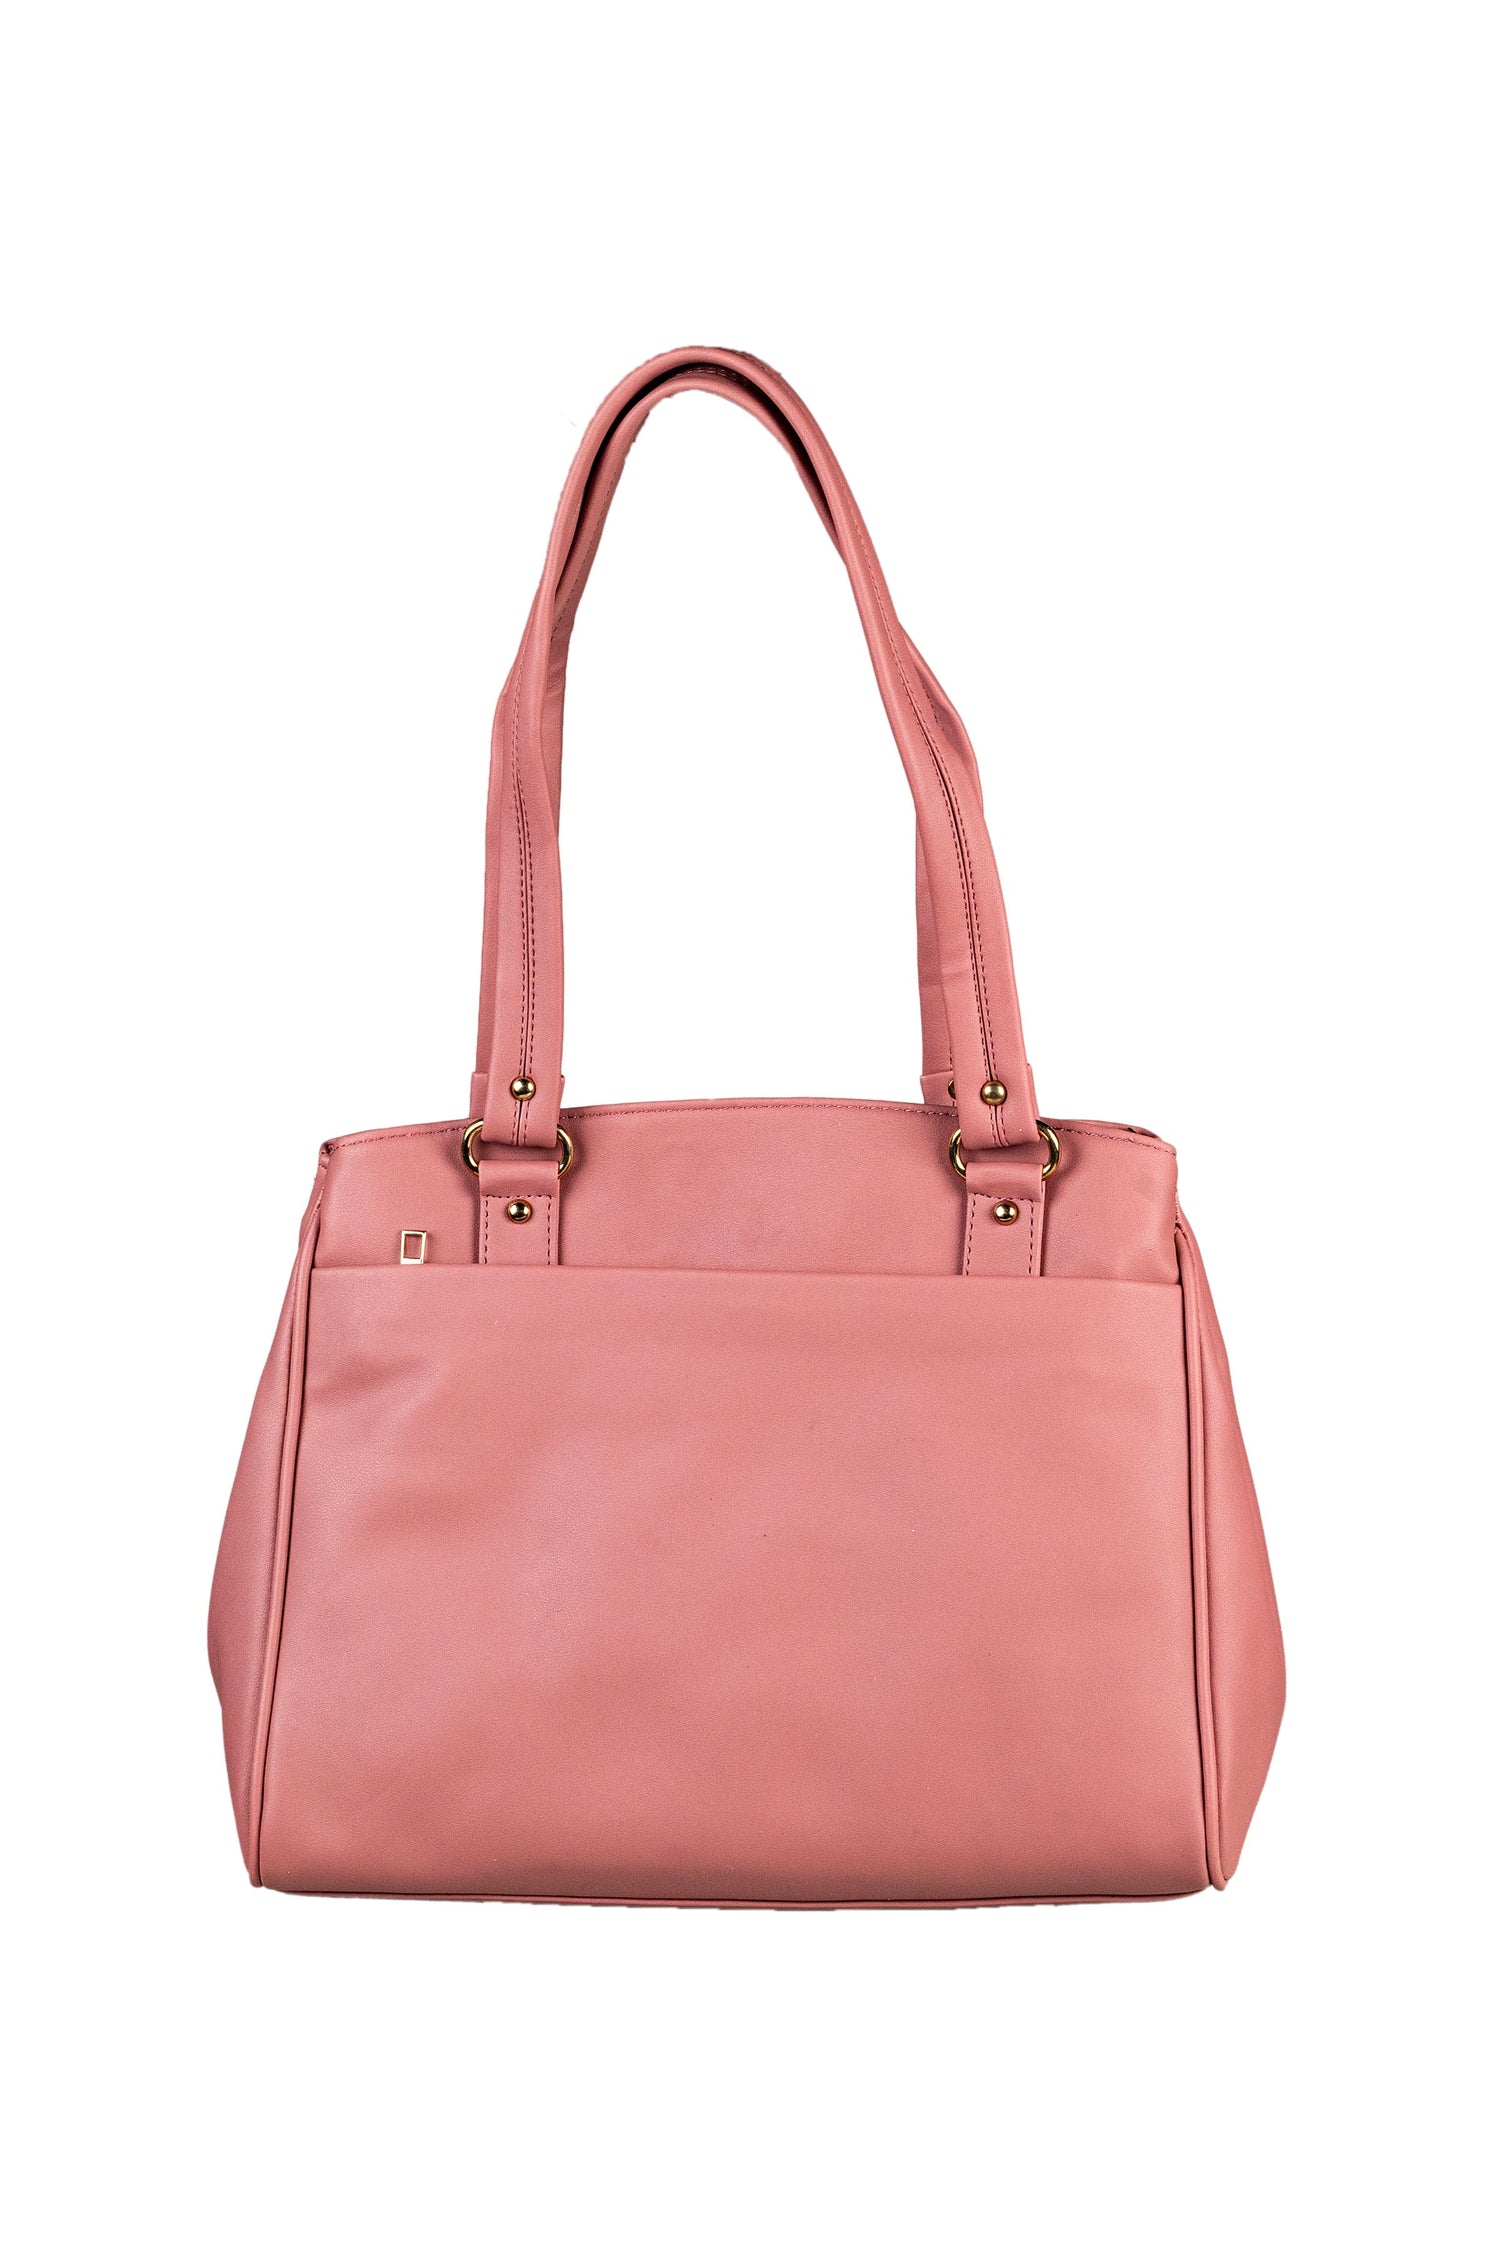 Titas Ladies Pink Handbags